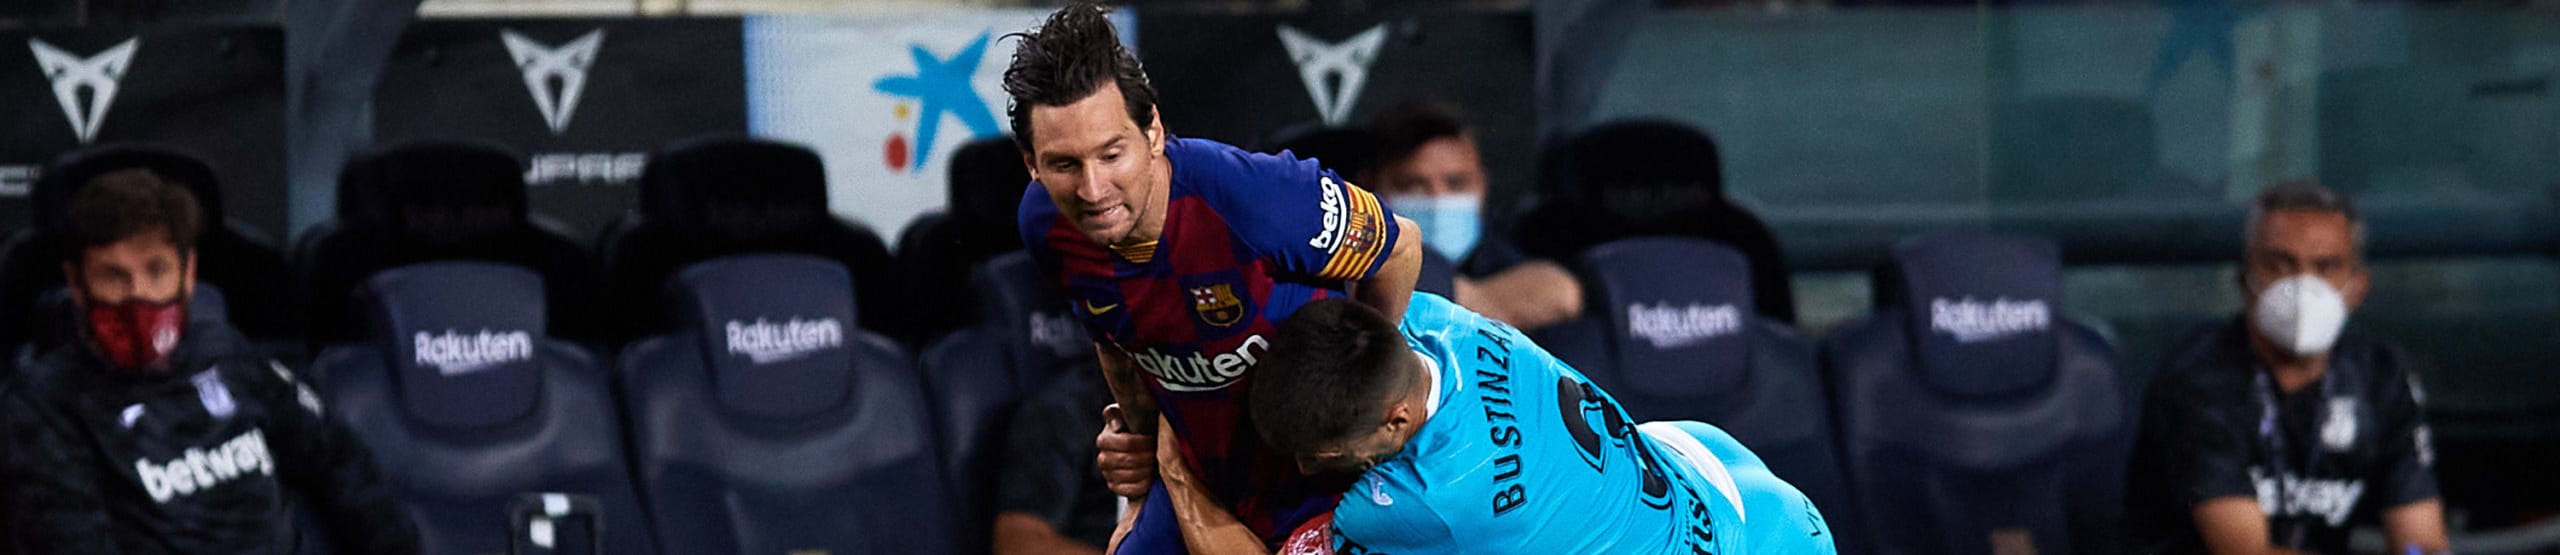 Pronostici Liga, tutte le partite di oggi 19 giugno: chi fermerà Messi?